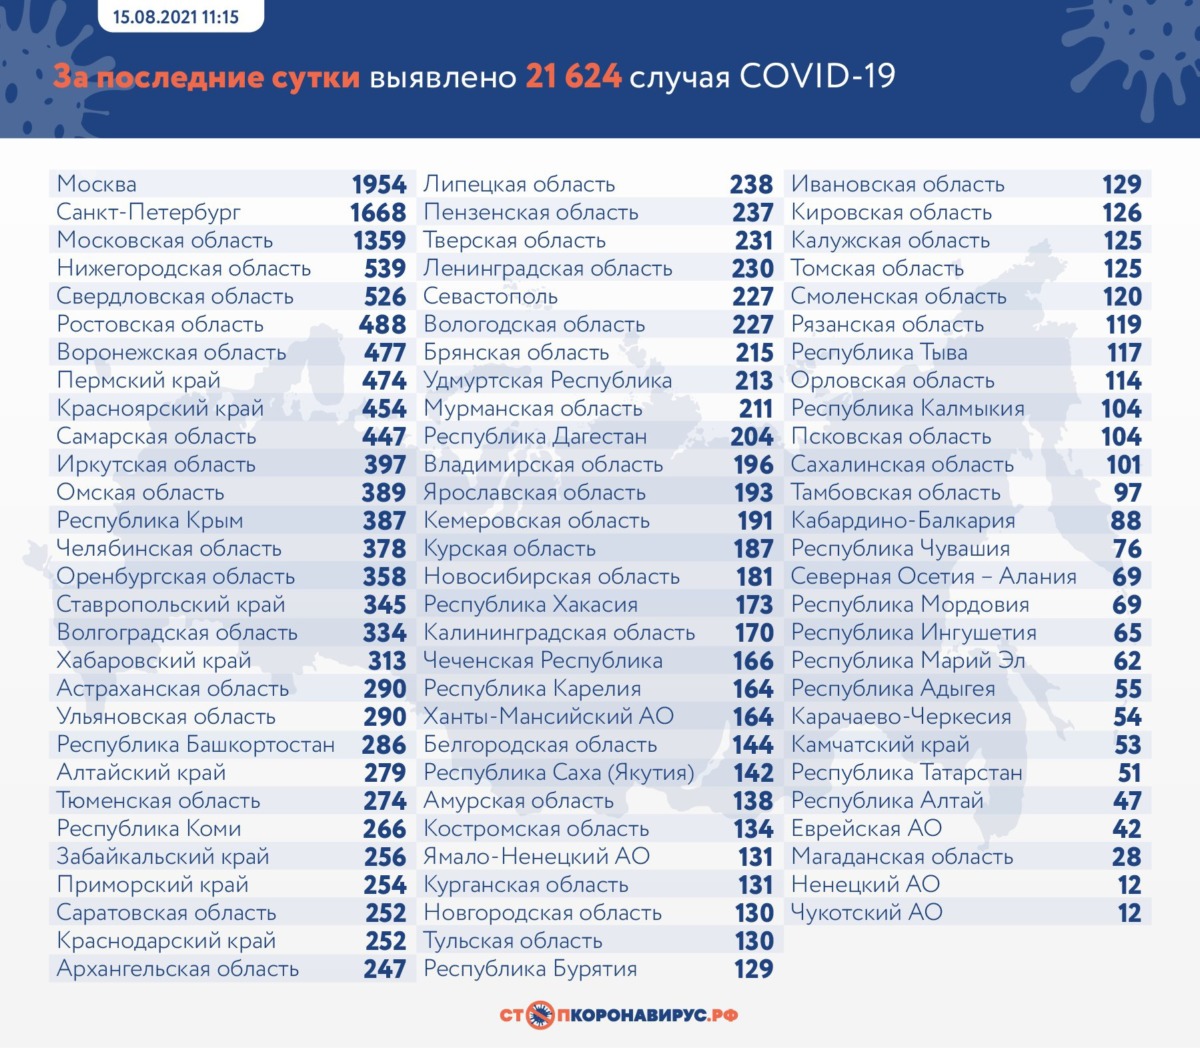 Статистика коронавируса в России на 15 августа